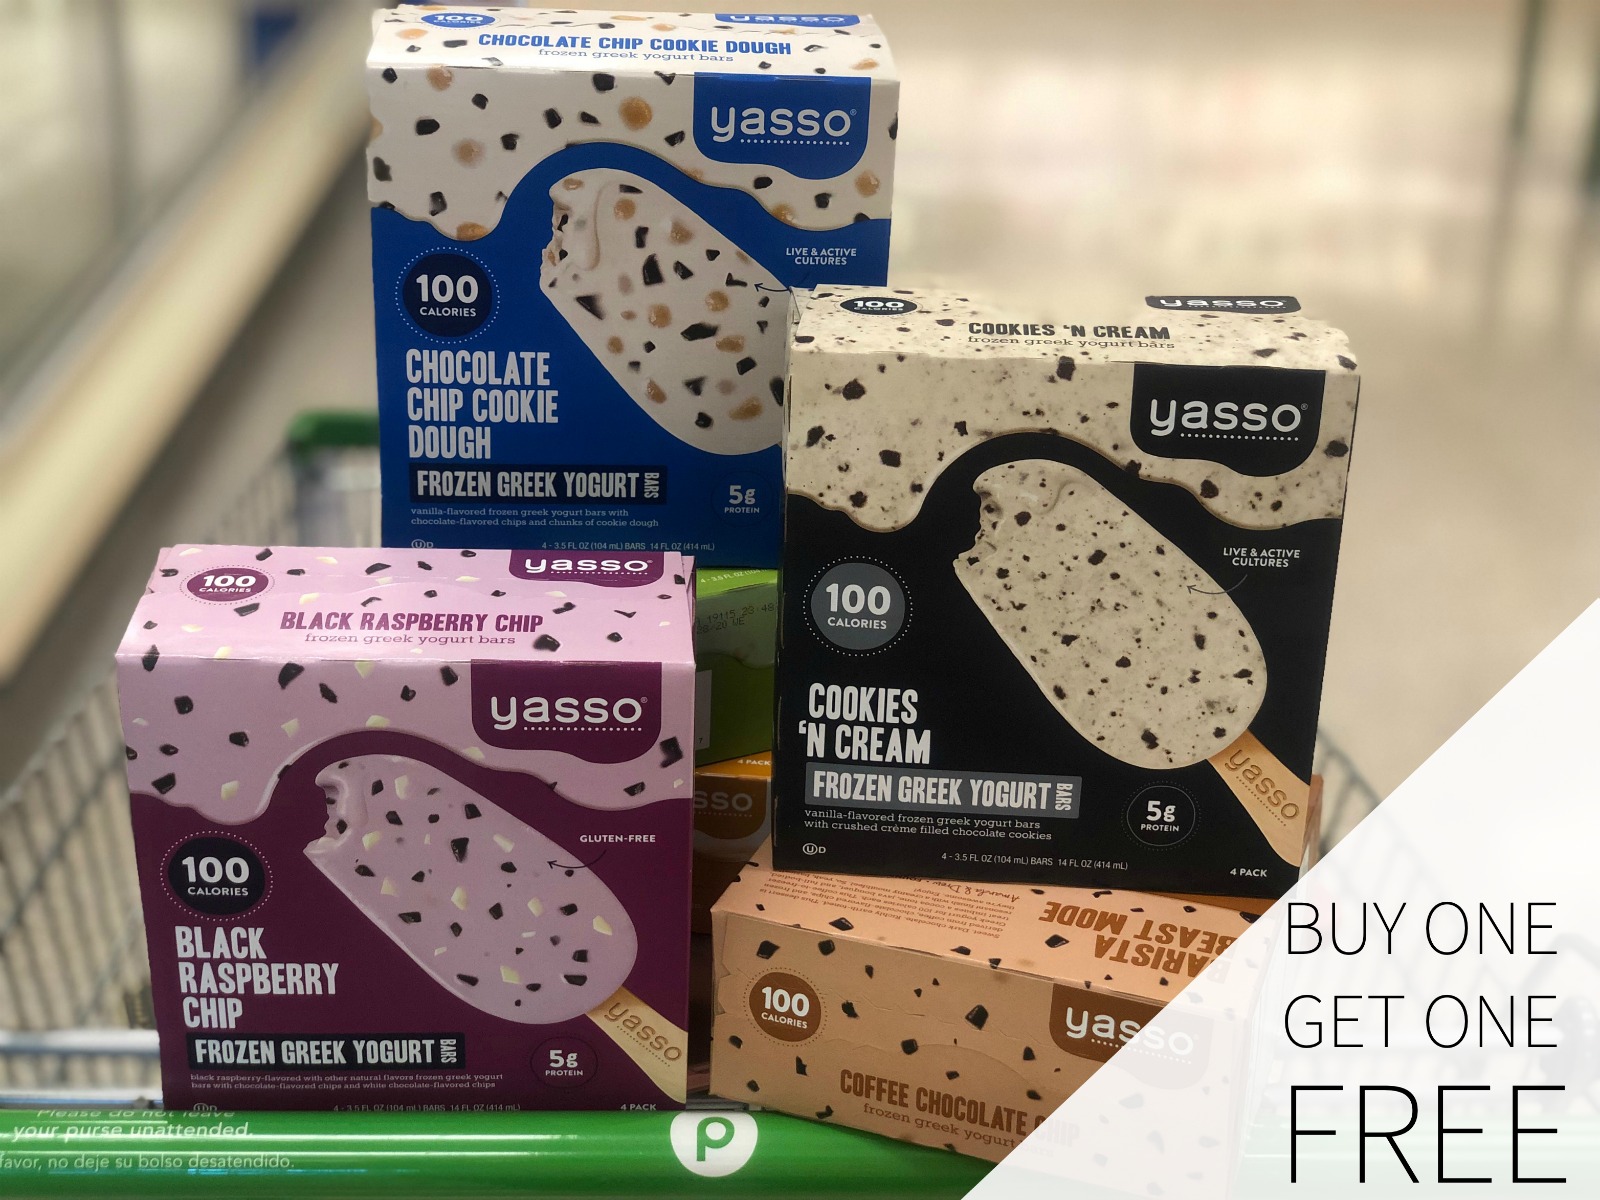 Stock Up On Yasso Frozen Greek Yogurt Bars – BOGO Sale This Week At Publix